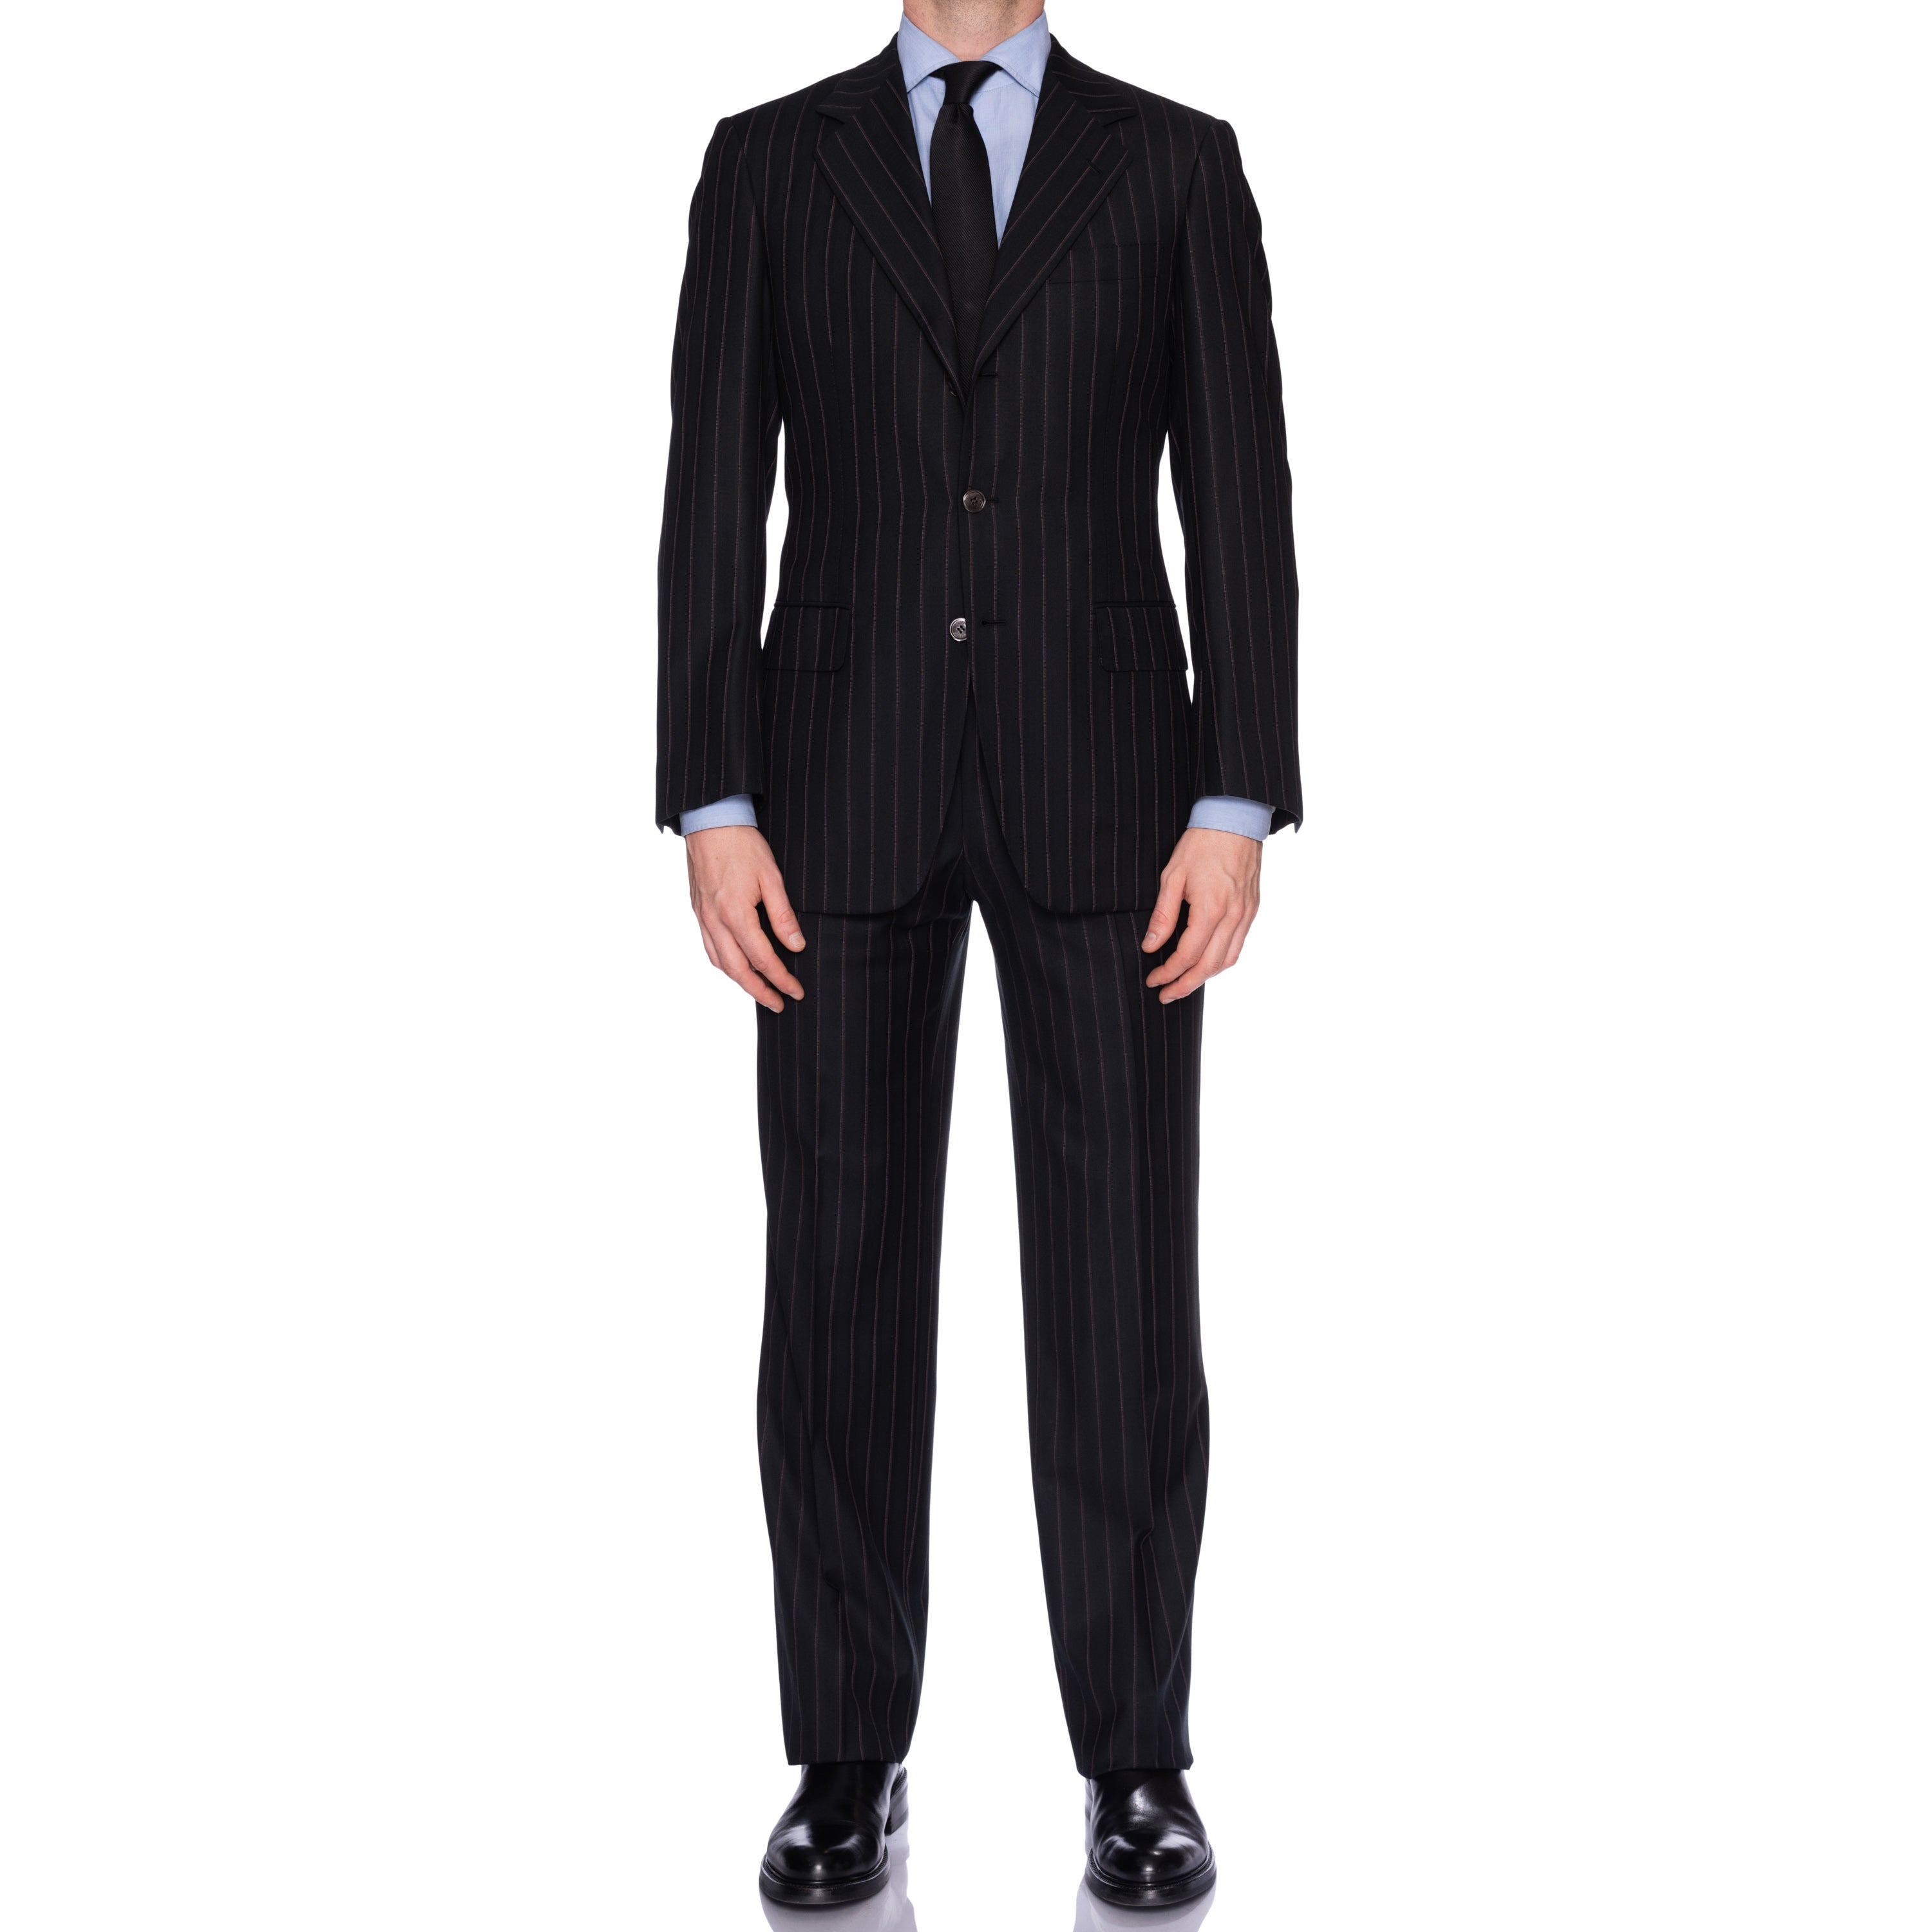 SARTORIA CASTANGIA Black Striped Wool Super 150's Suit EU 48 NEW US 38 CASTANGIA